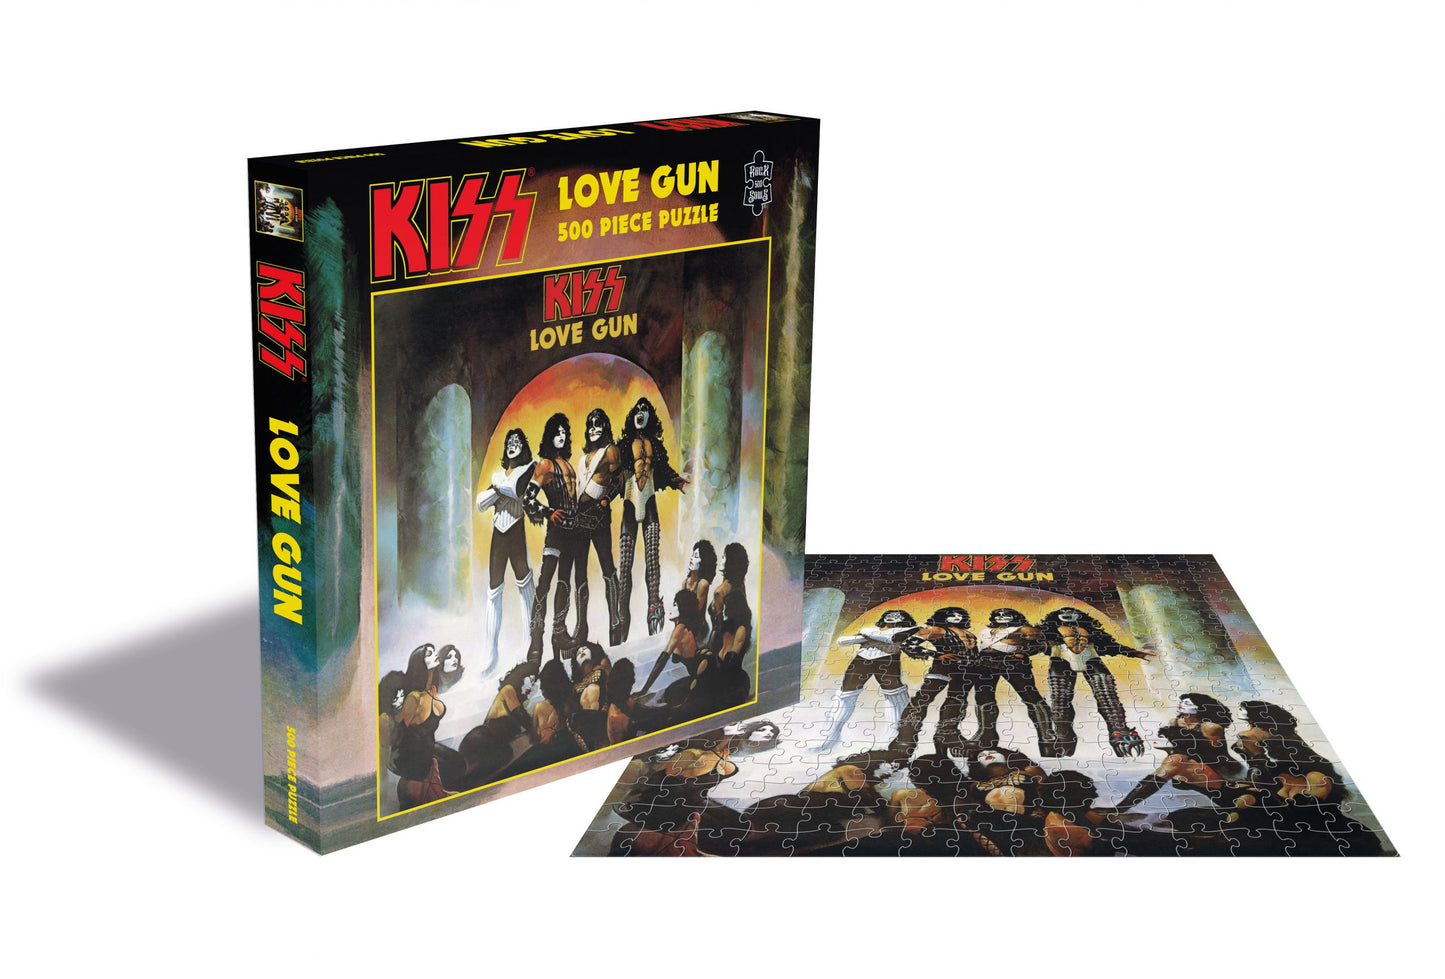 Kiss - Love Gun, 500 brikker puslespil